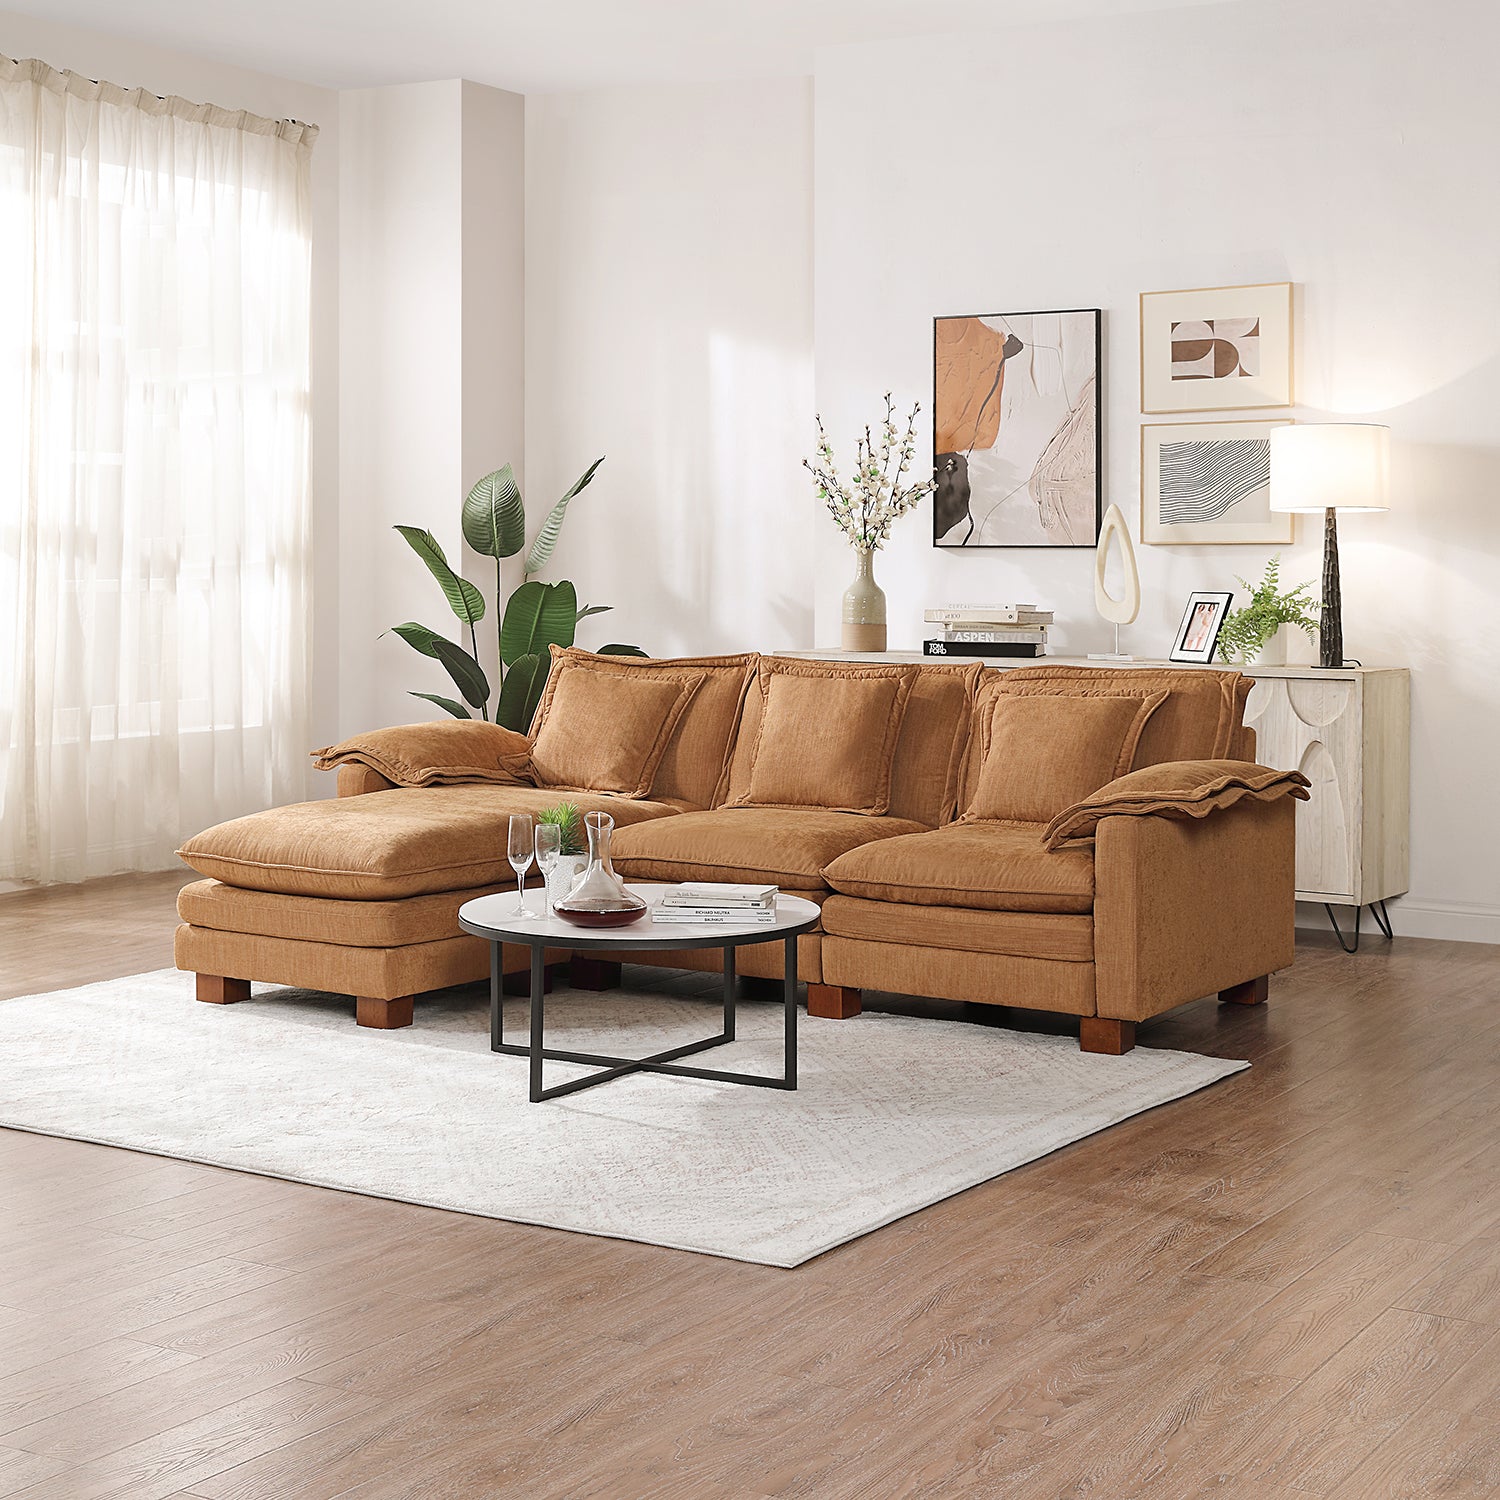 Stacked Tan Linen Fabric Custom Sectional Modular Sofa